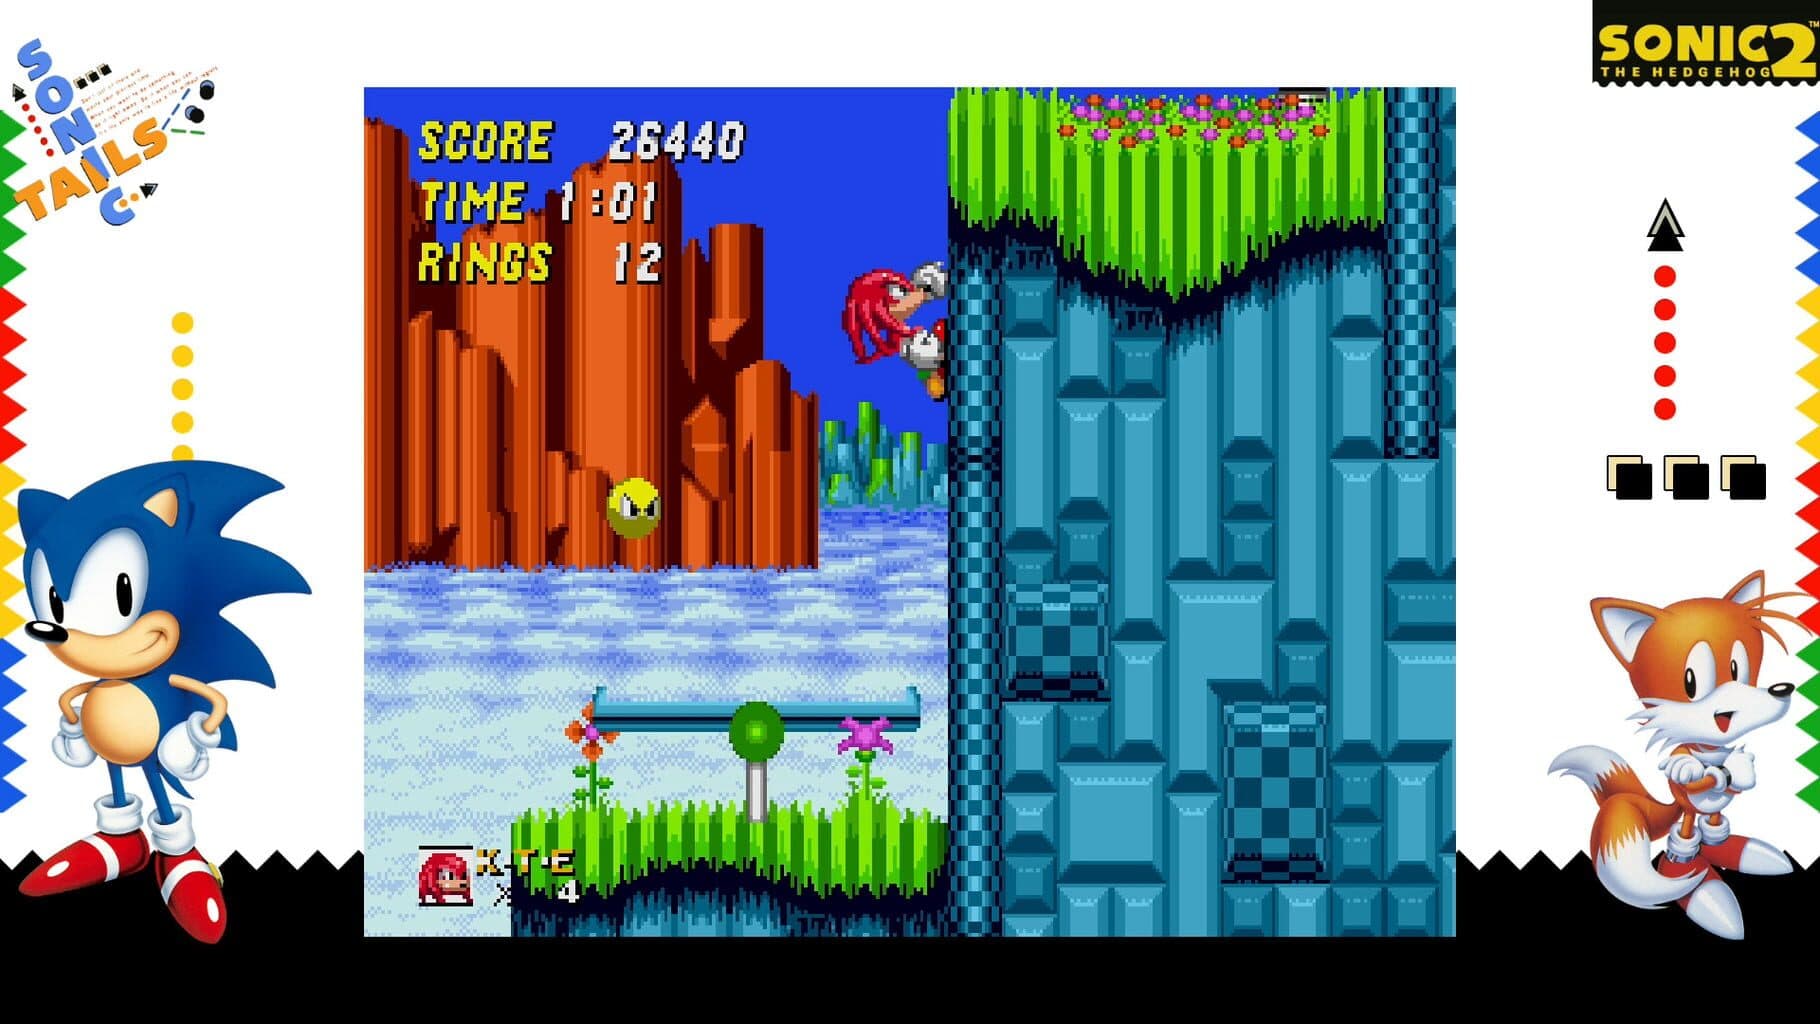 Sega Ages: Sonic the Hedgehog 2 Image